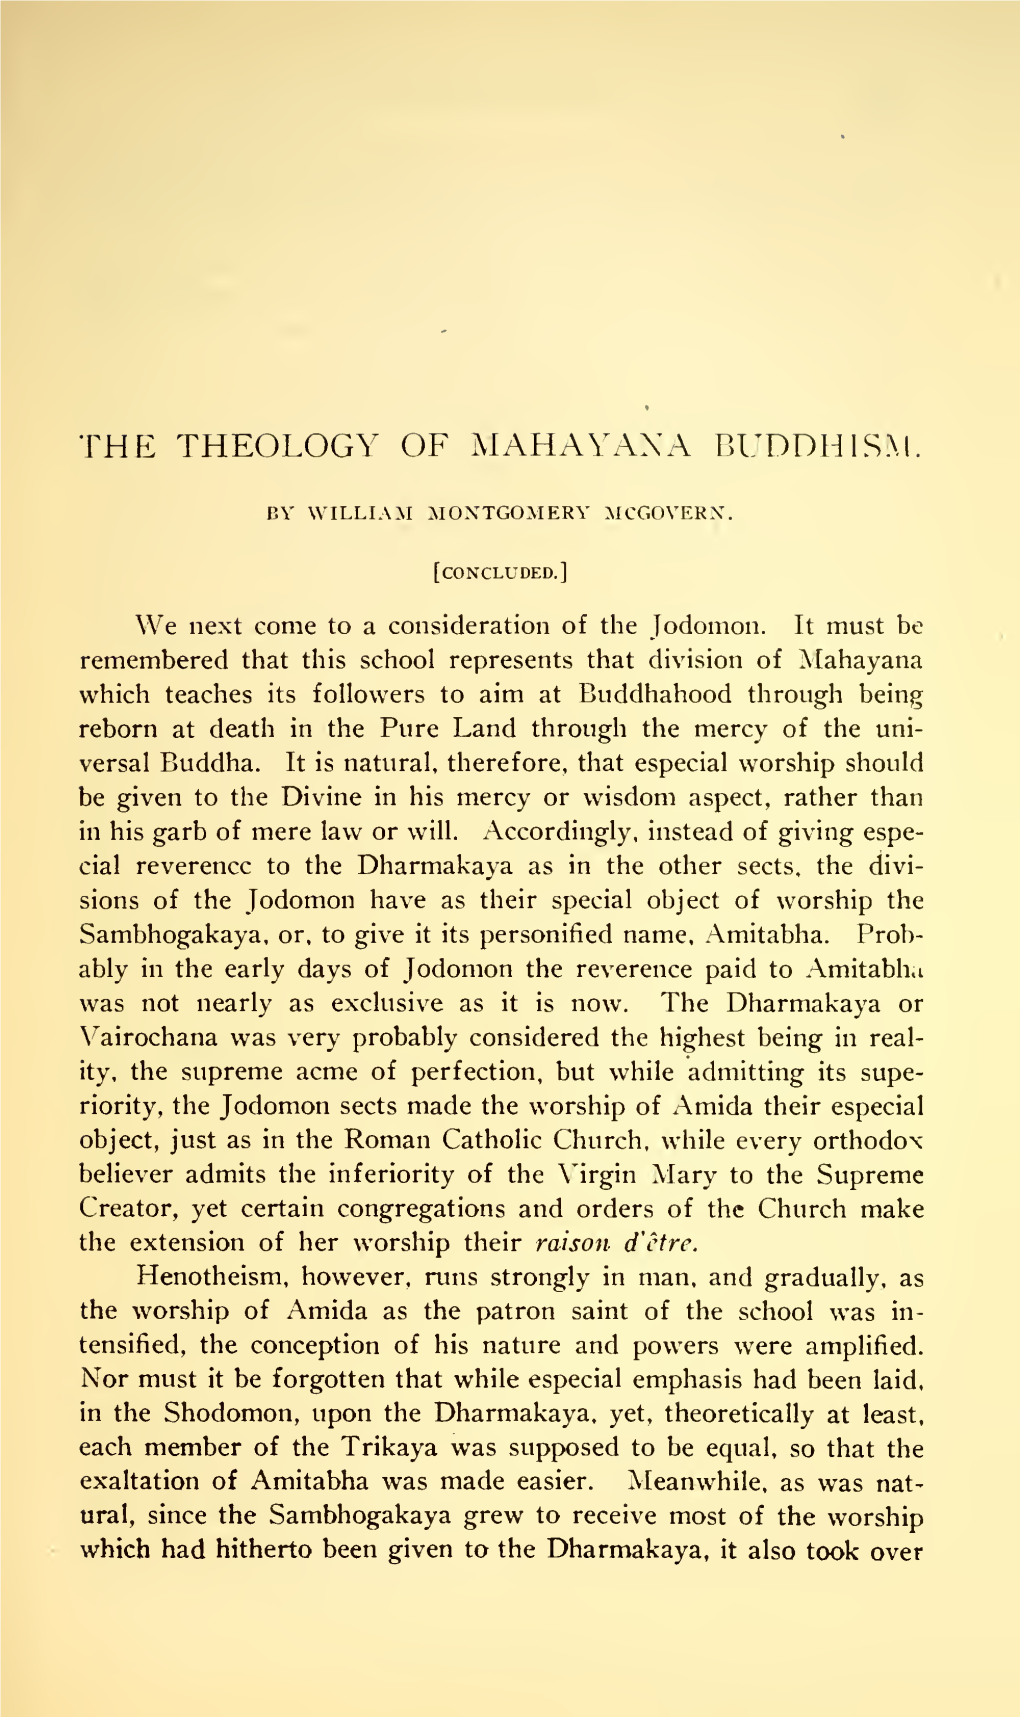 The Theology of Mahayana Buddhism